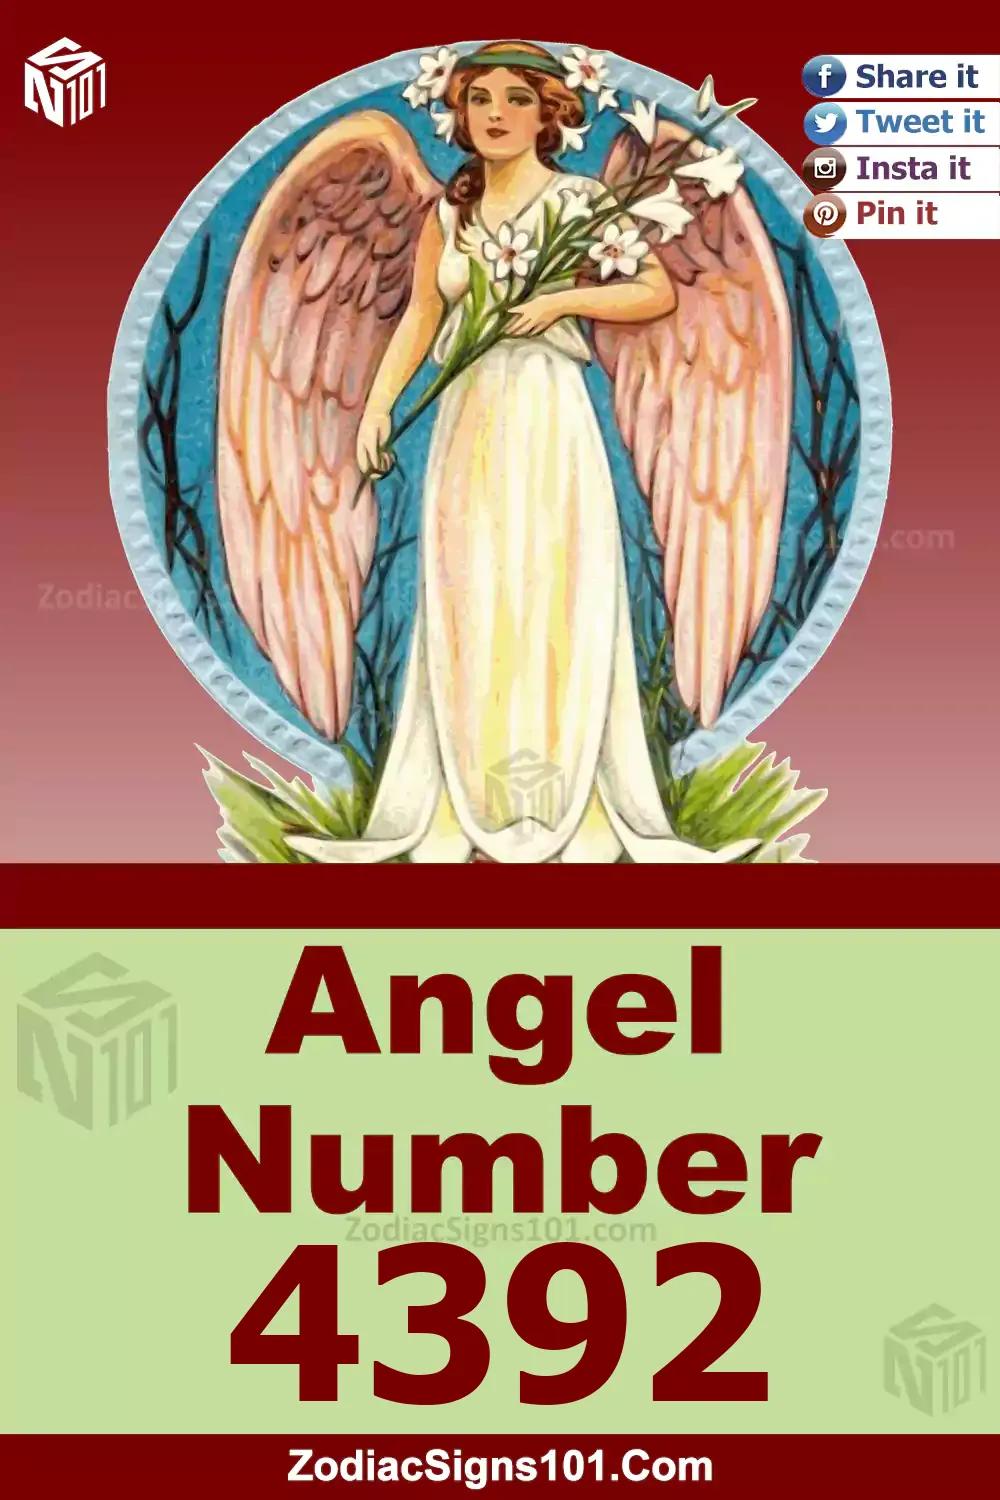 4392-Angel-Number-Meaning.jpg